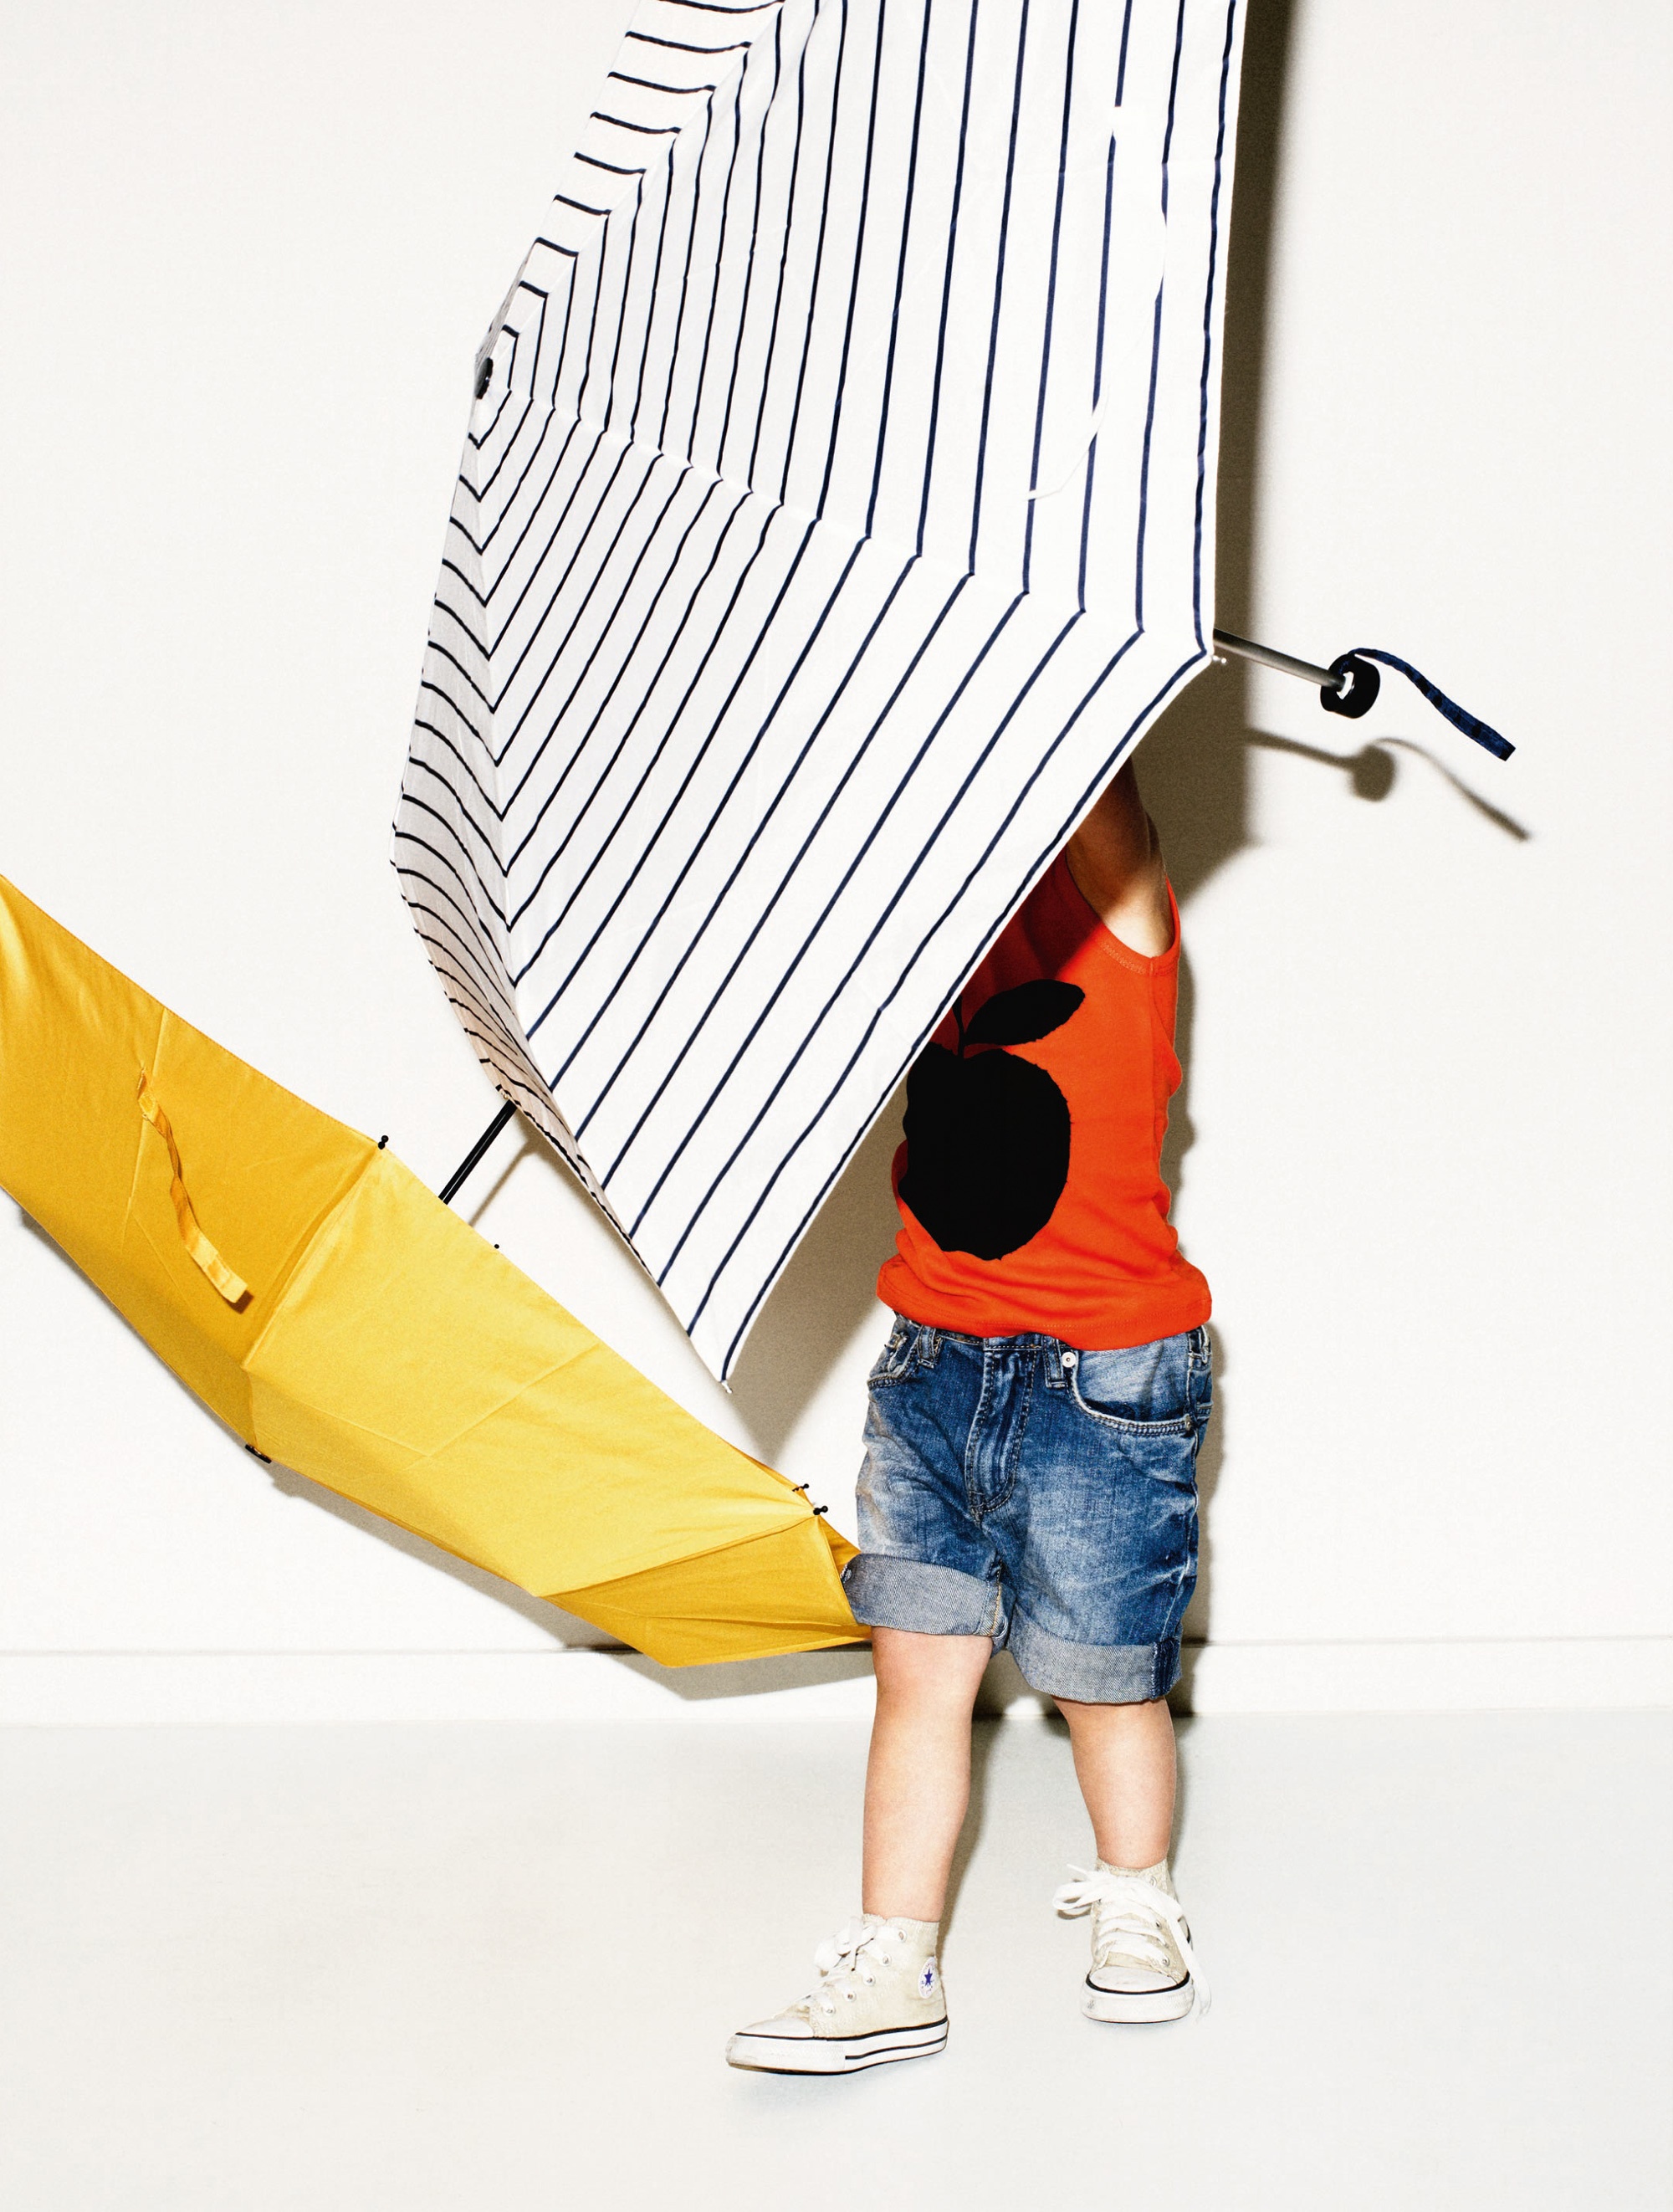 Nido magazine kid's fashion photography by Frederike Hellwig